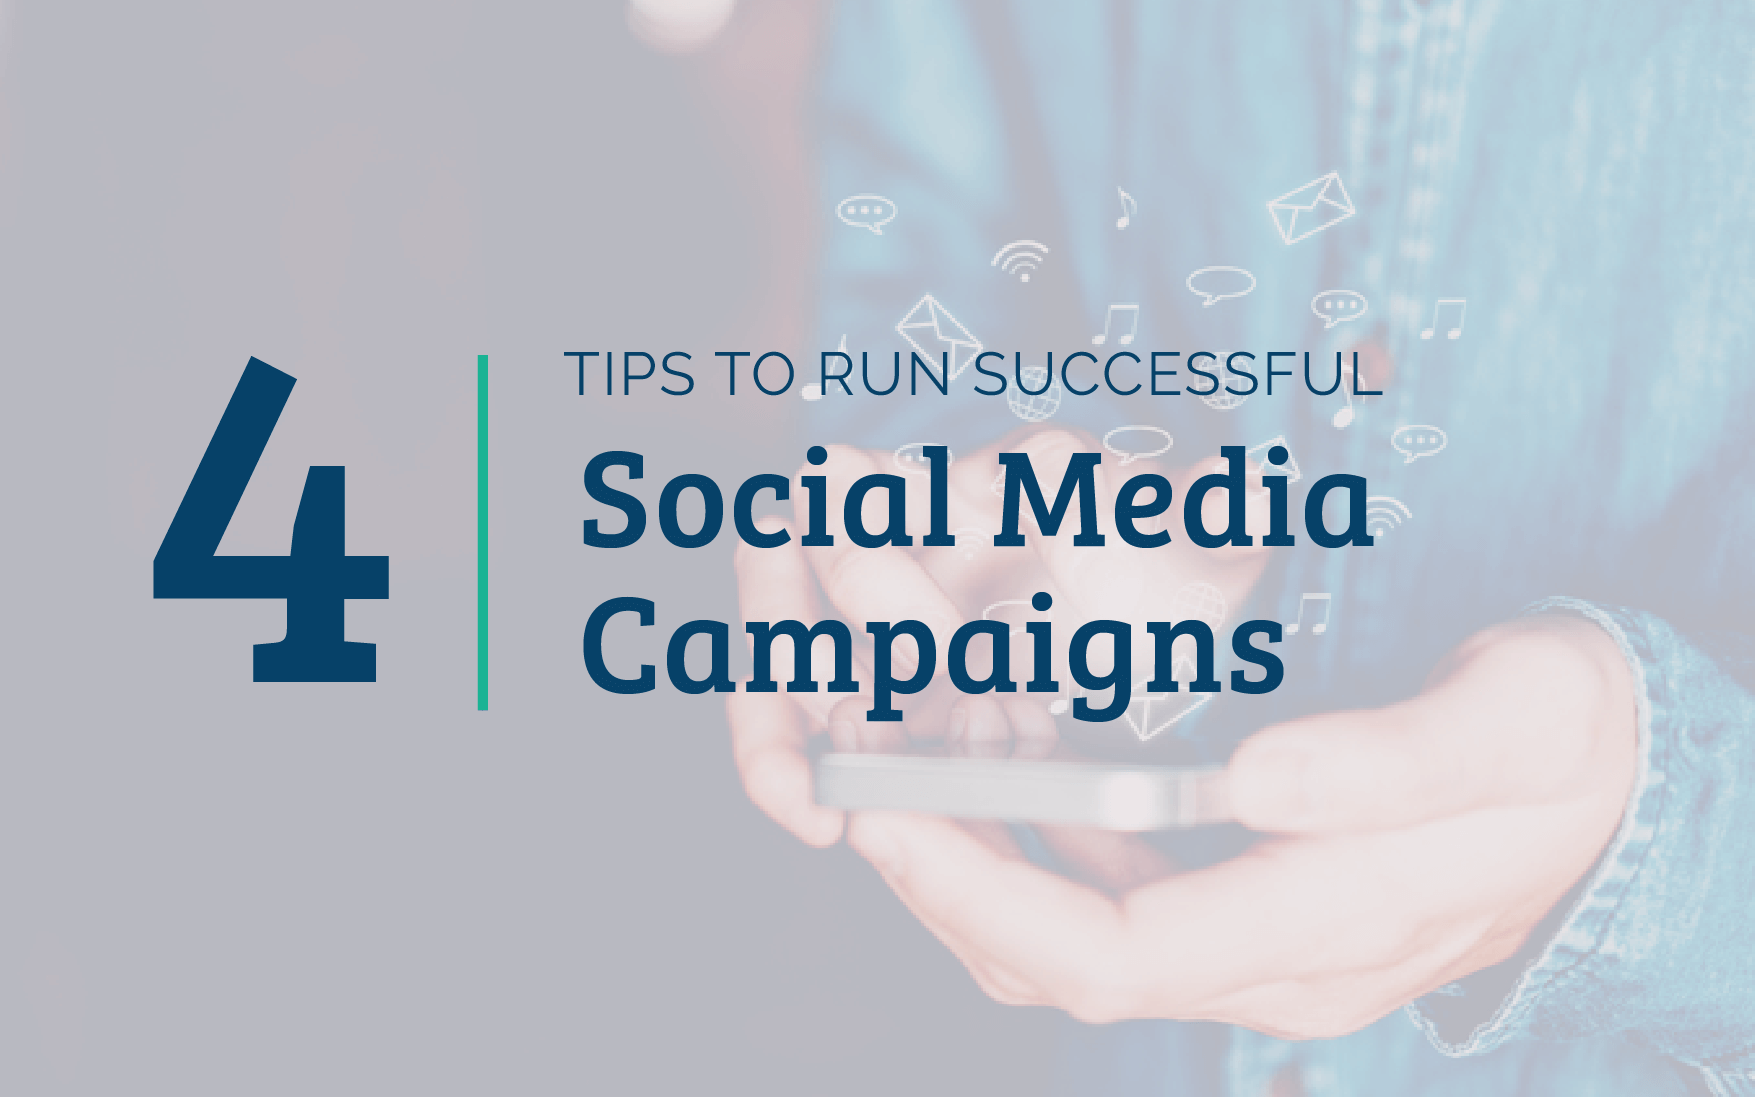 Effective social media campaign tips